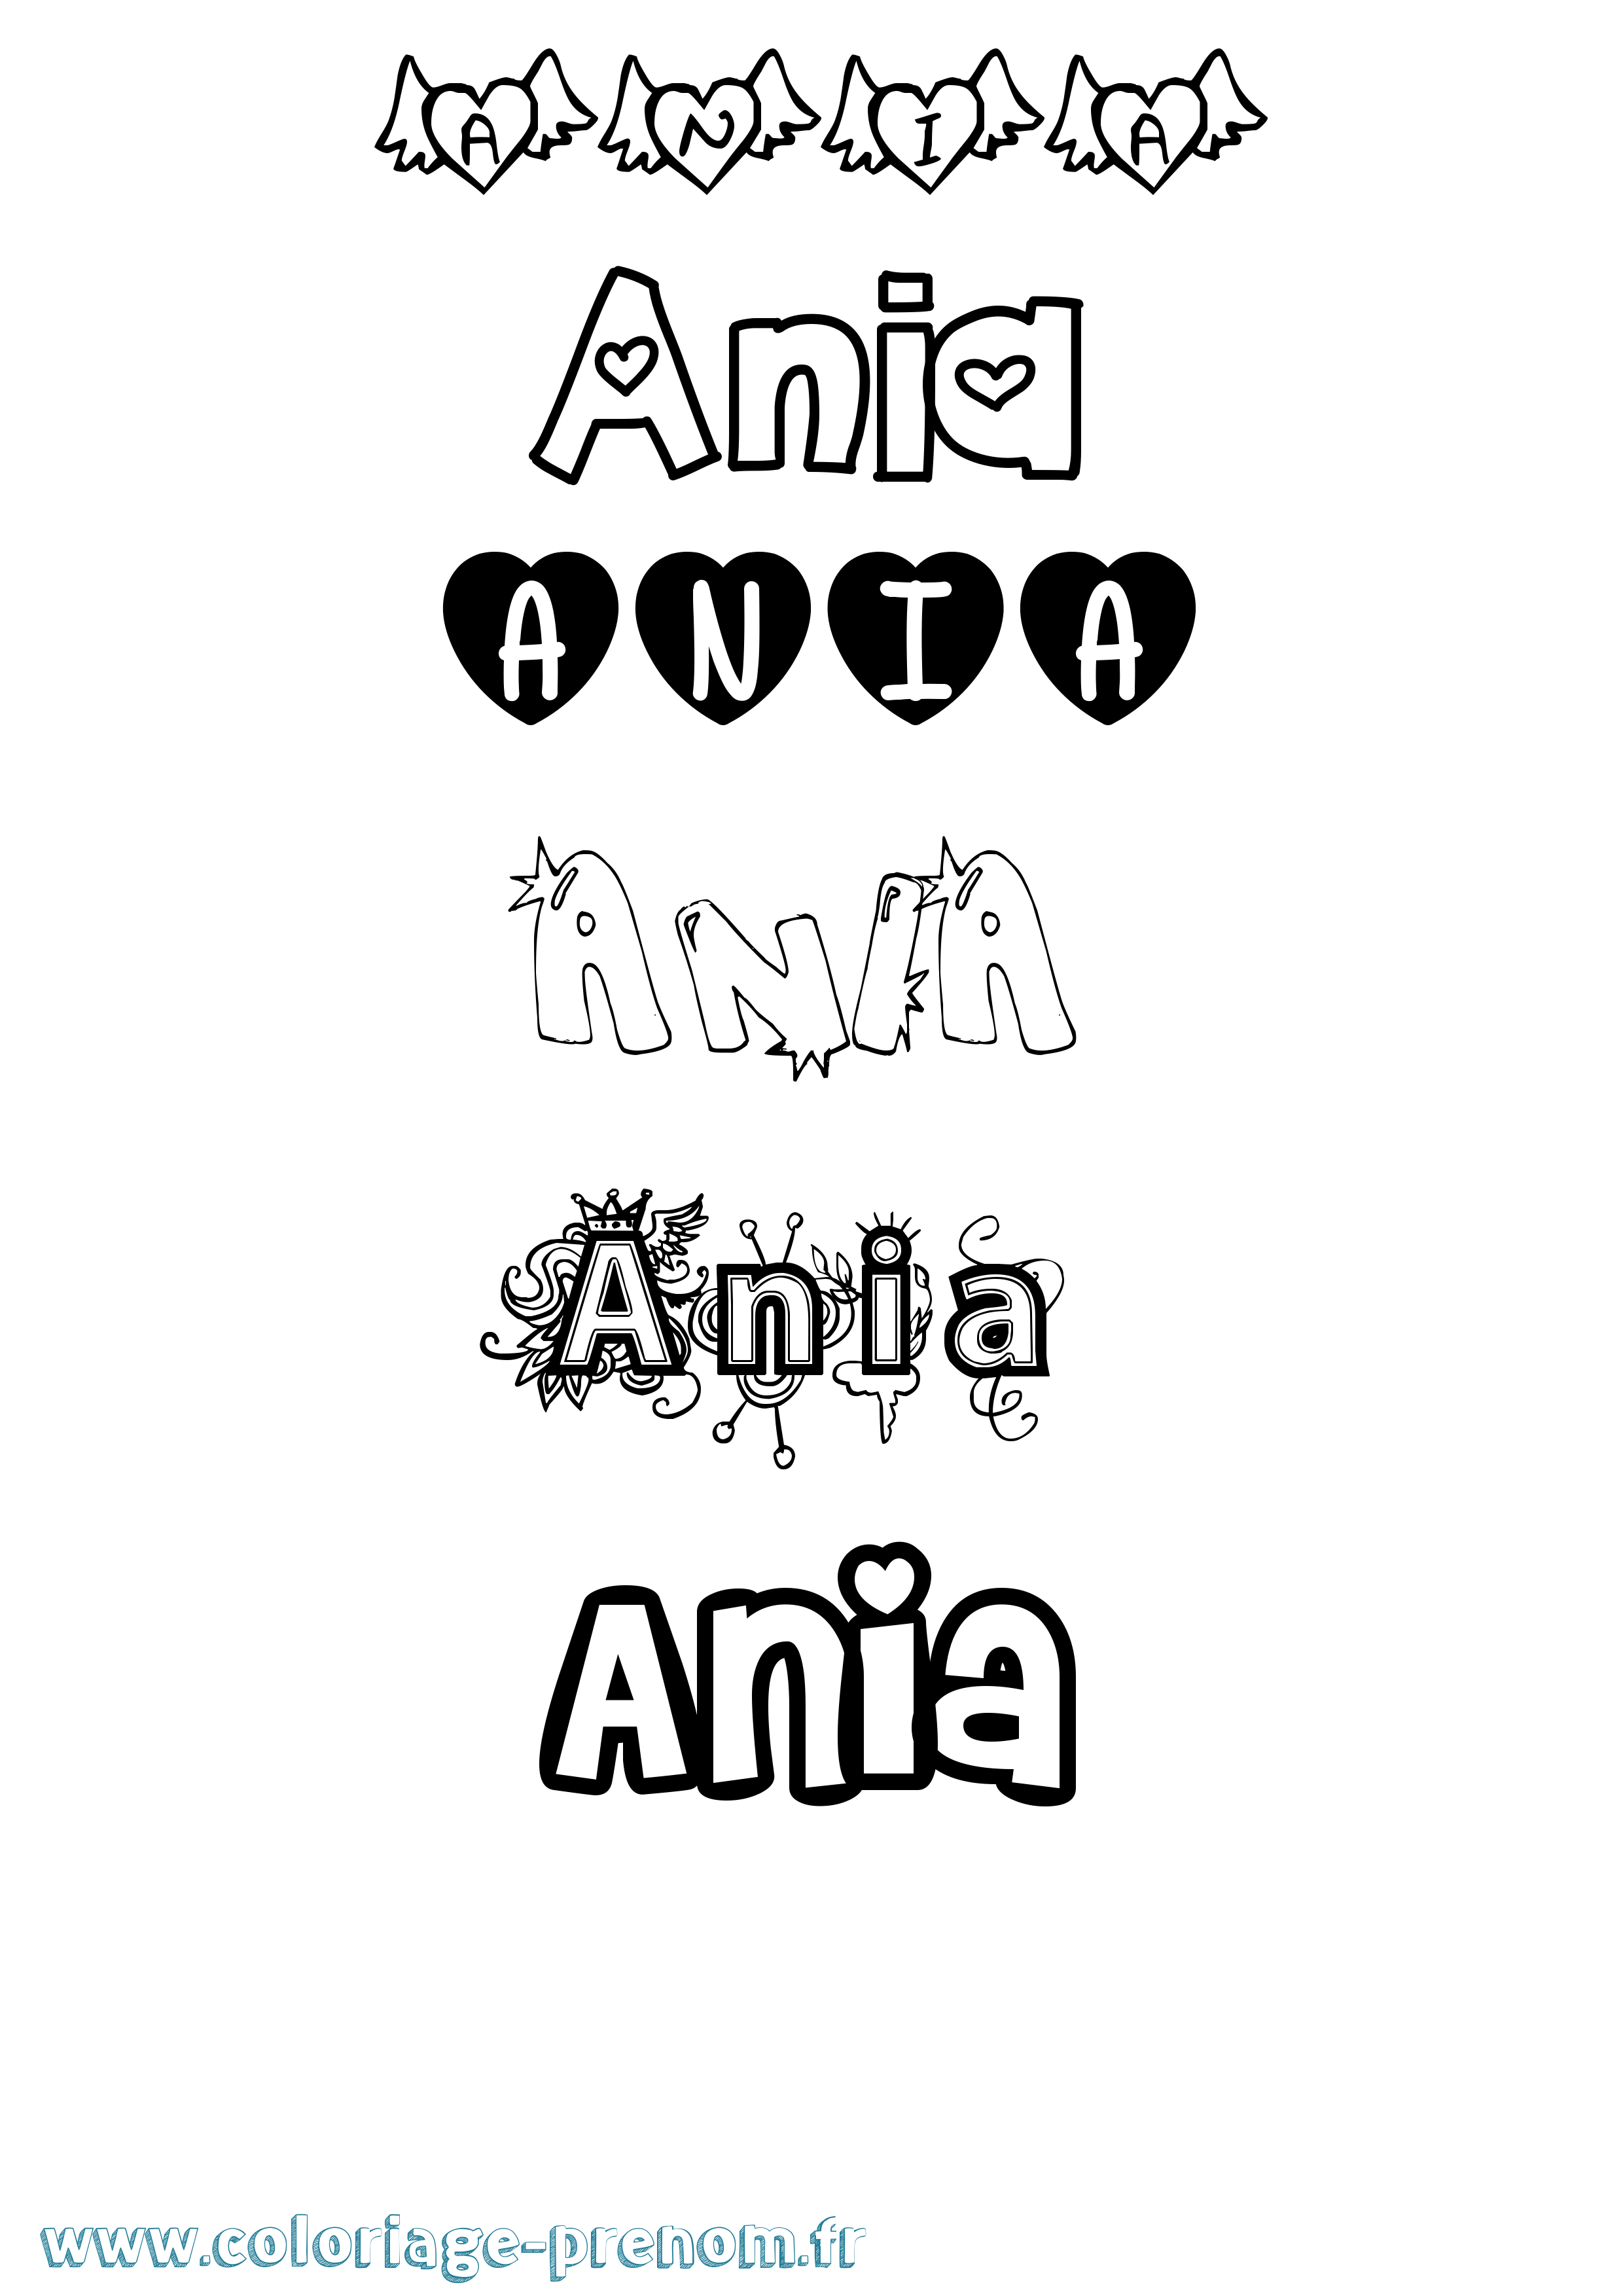 Coloriage prénom Ania Girly